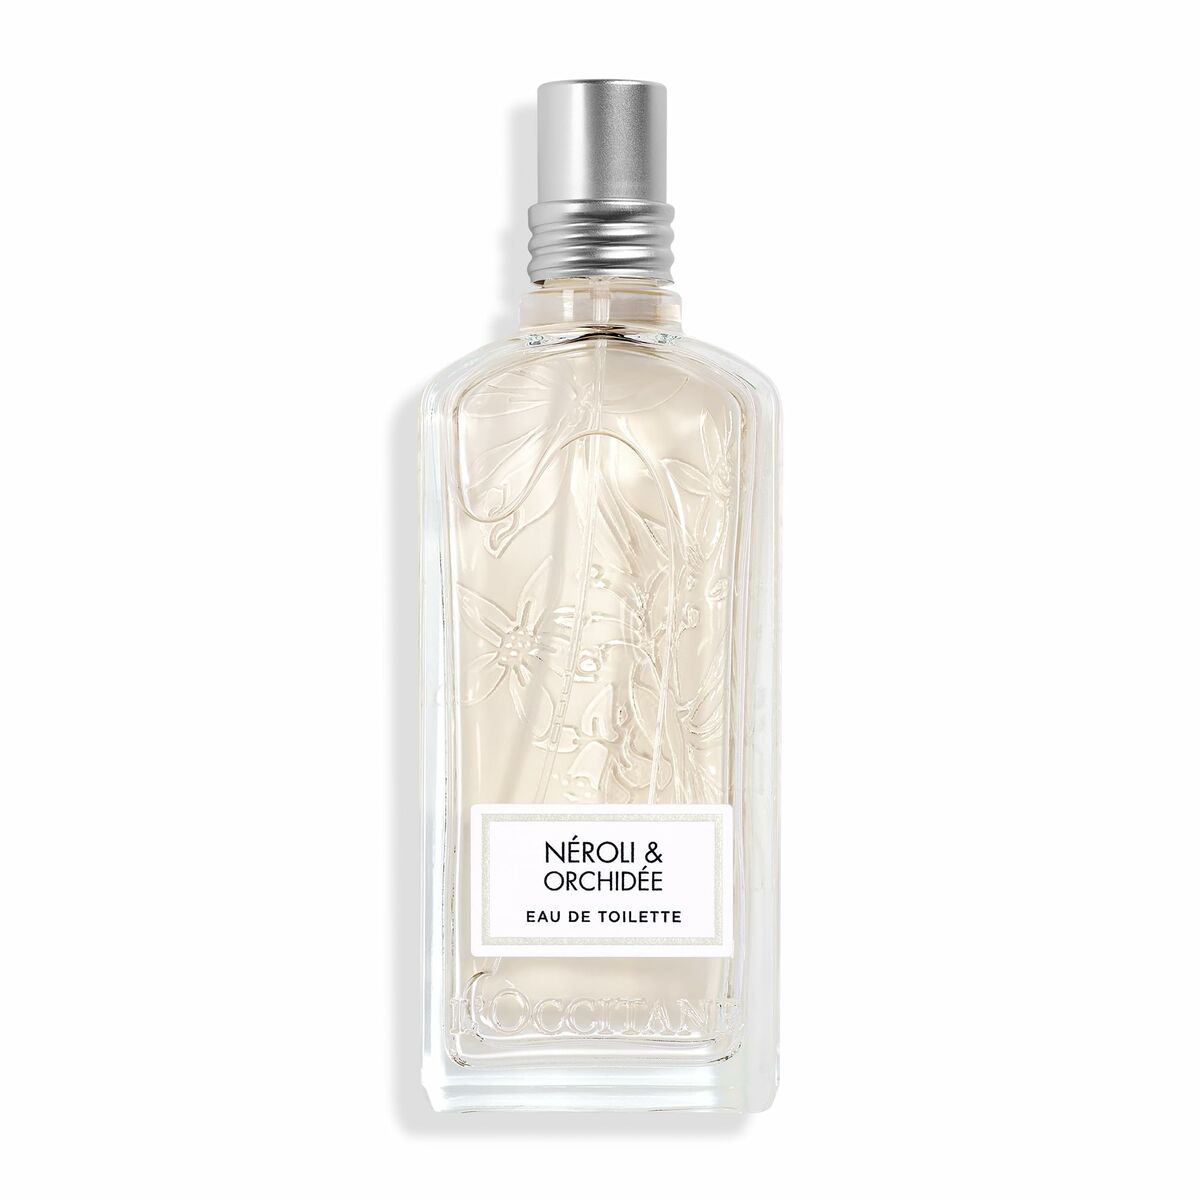 Women's Perfume L'Occitane En Provence NÉROLI & ORCHIDÉE EDT 75 ml Neroli & Orchidee